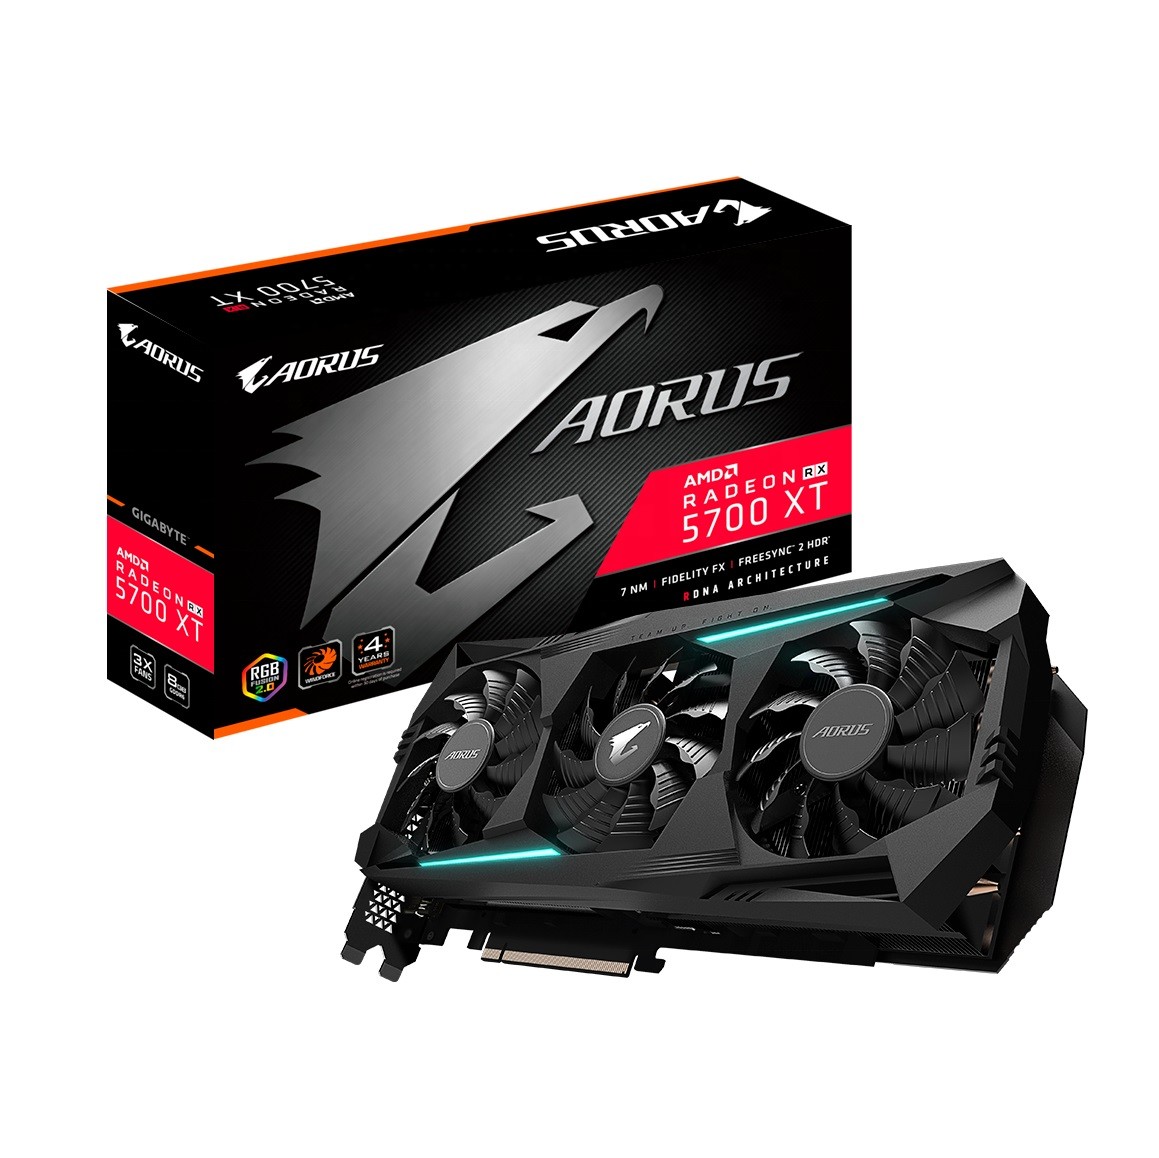 Buy 8pin Aorus AMD Radeon GAMING OC Graphics Card RX5700 XT 8G Video Card 256bit at wholesale prices